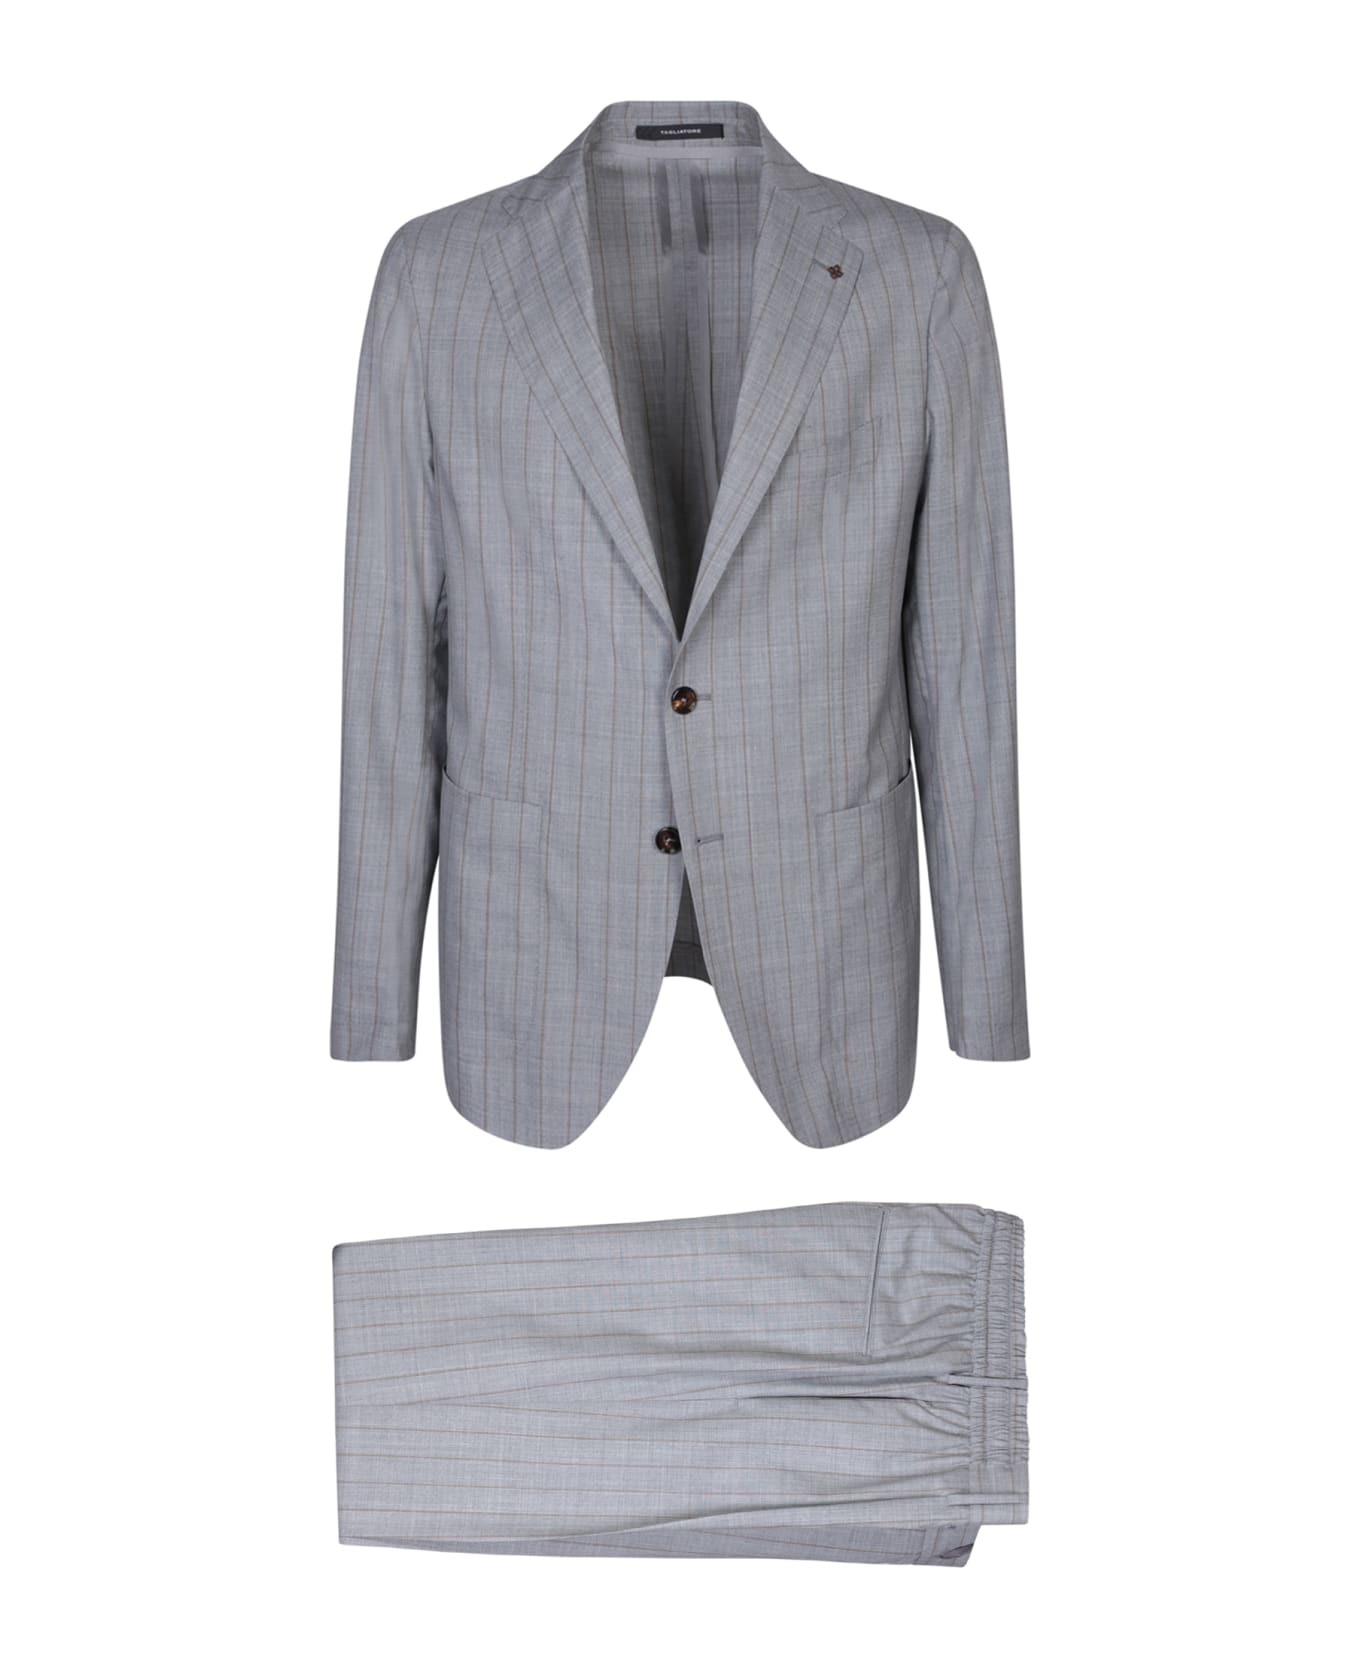 Tagliatore Grey/brown Pinstripe Suit - Brown